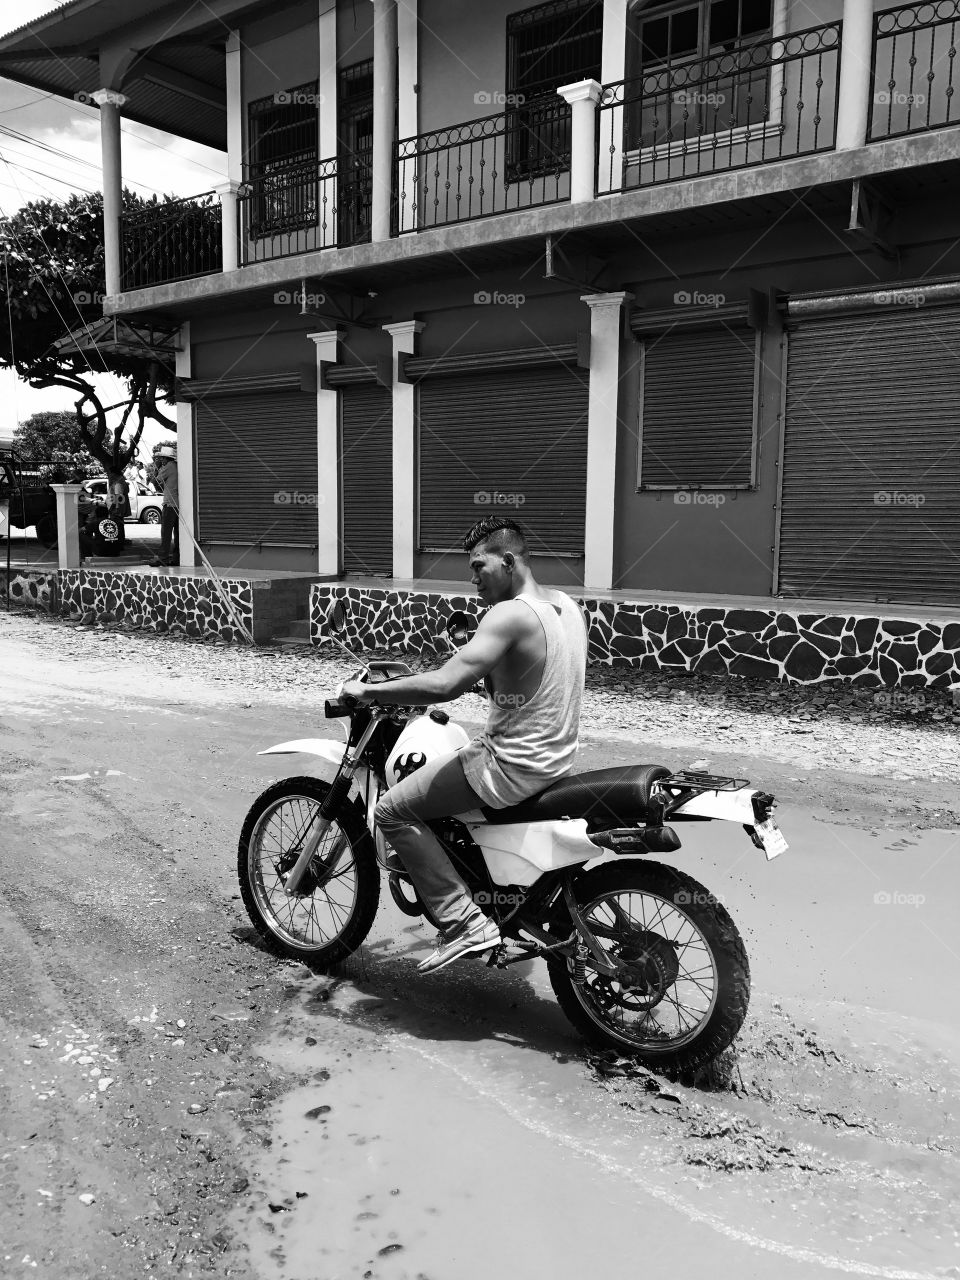 Motorcycle in the street | Sébaco, Nicaragua 